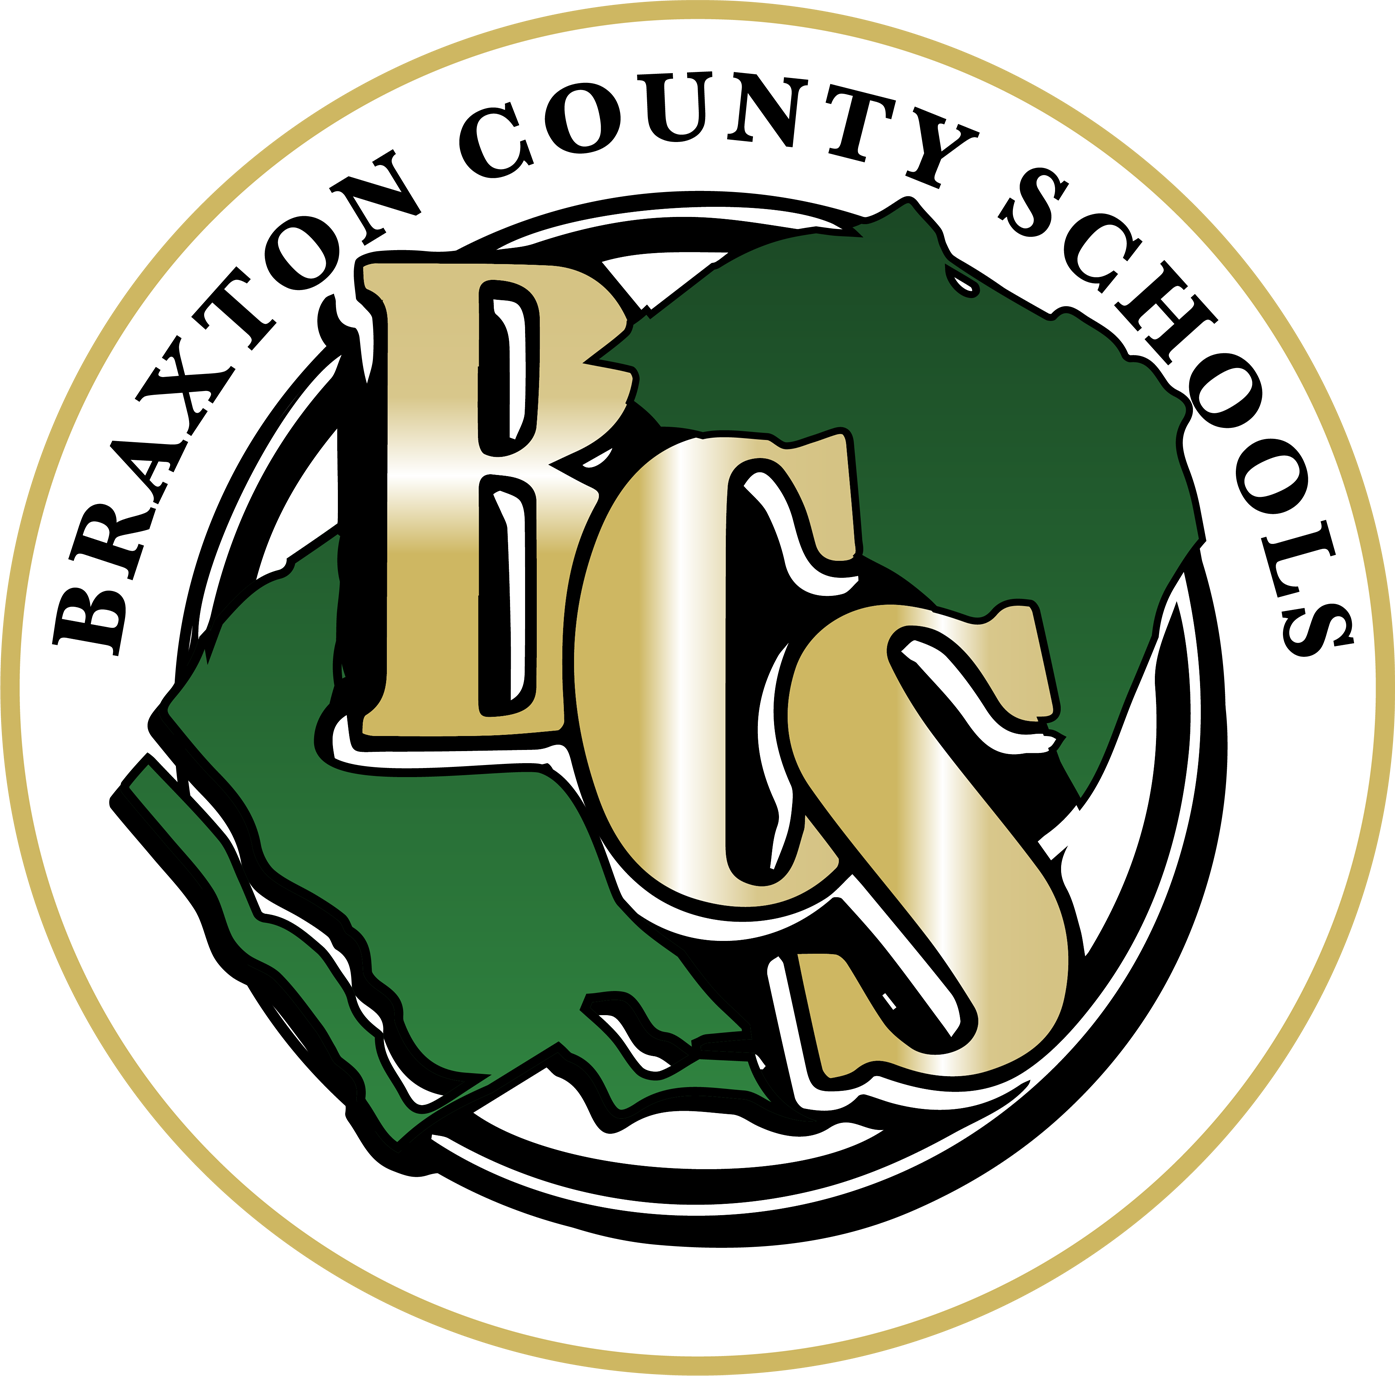 Documents | Braxton County School District